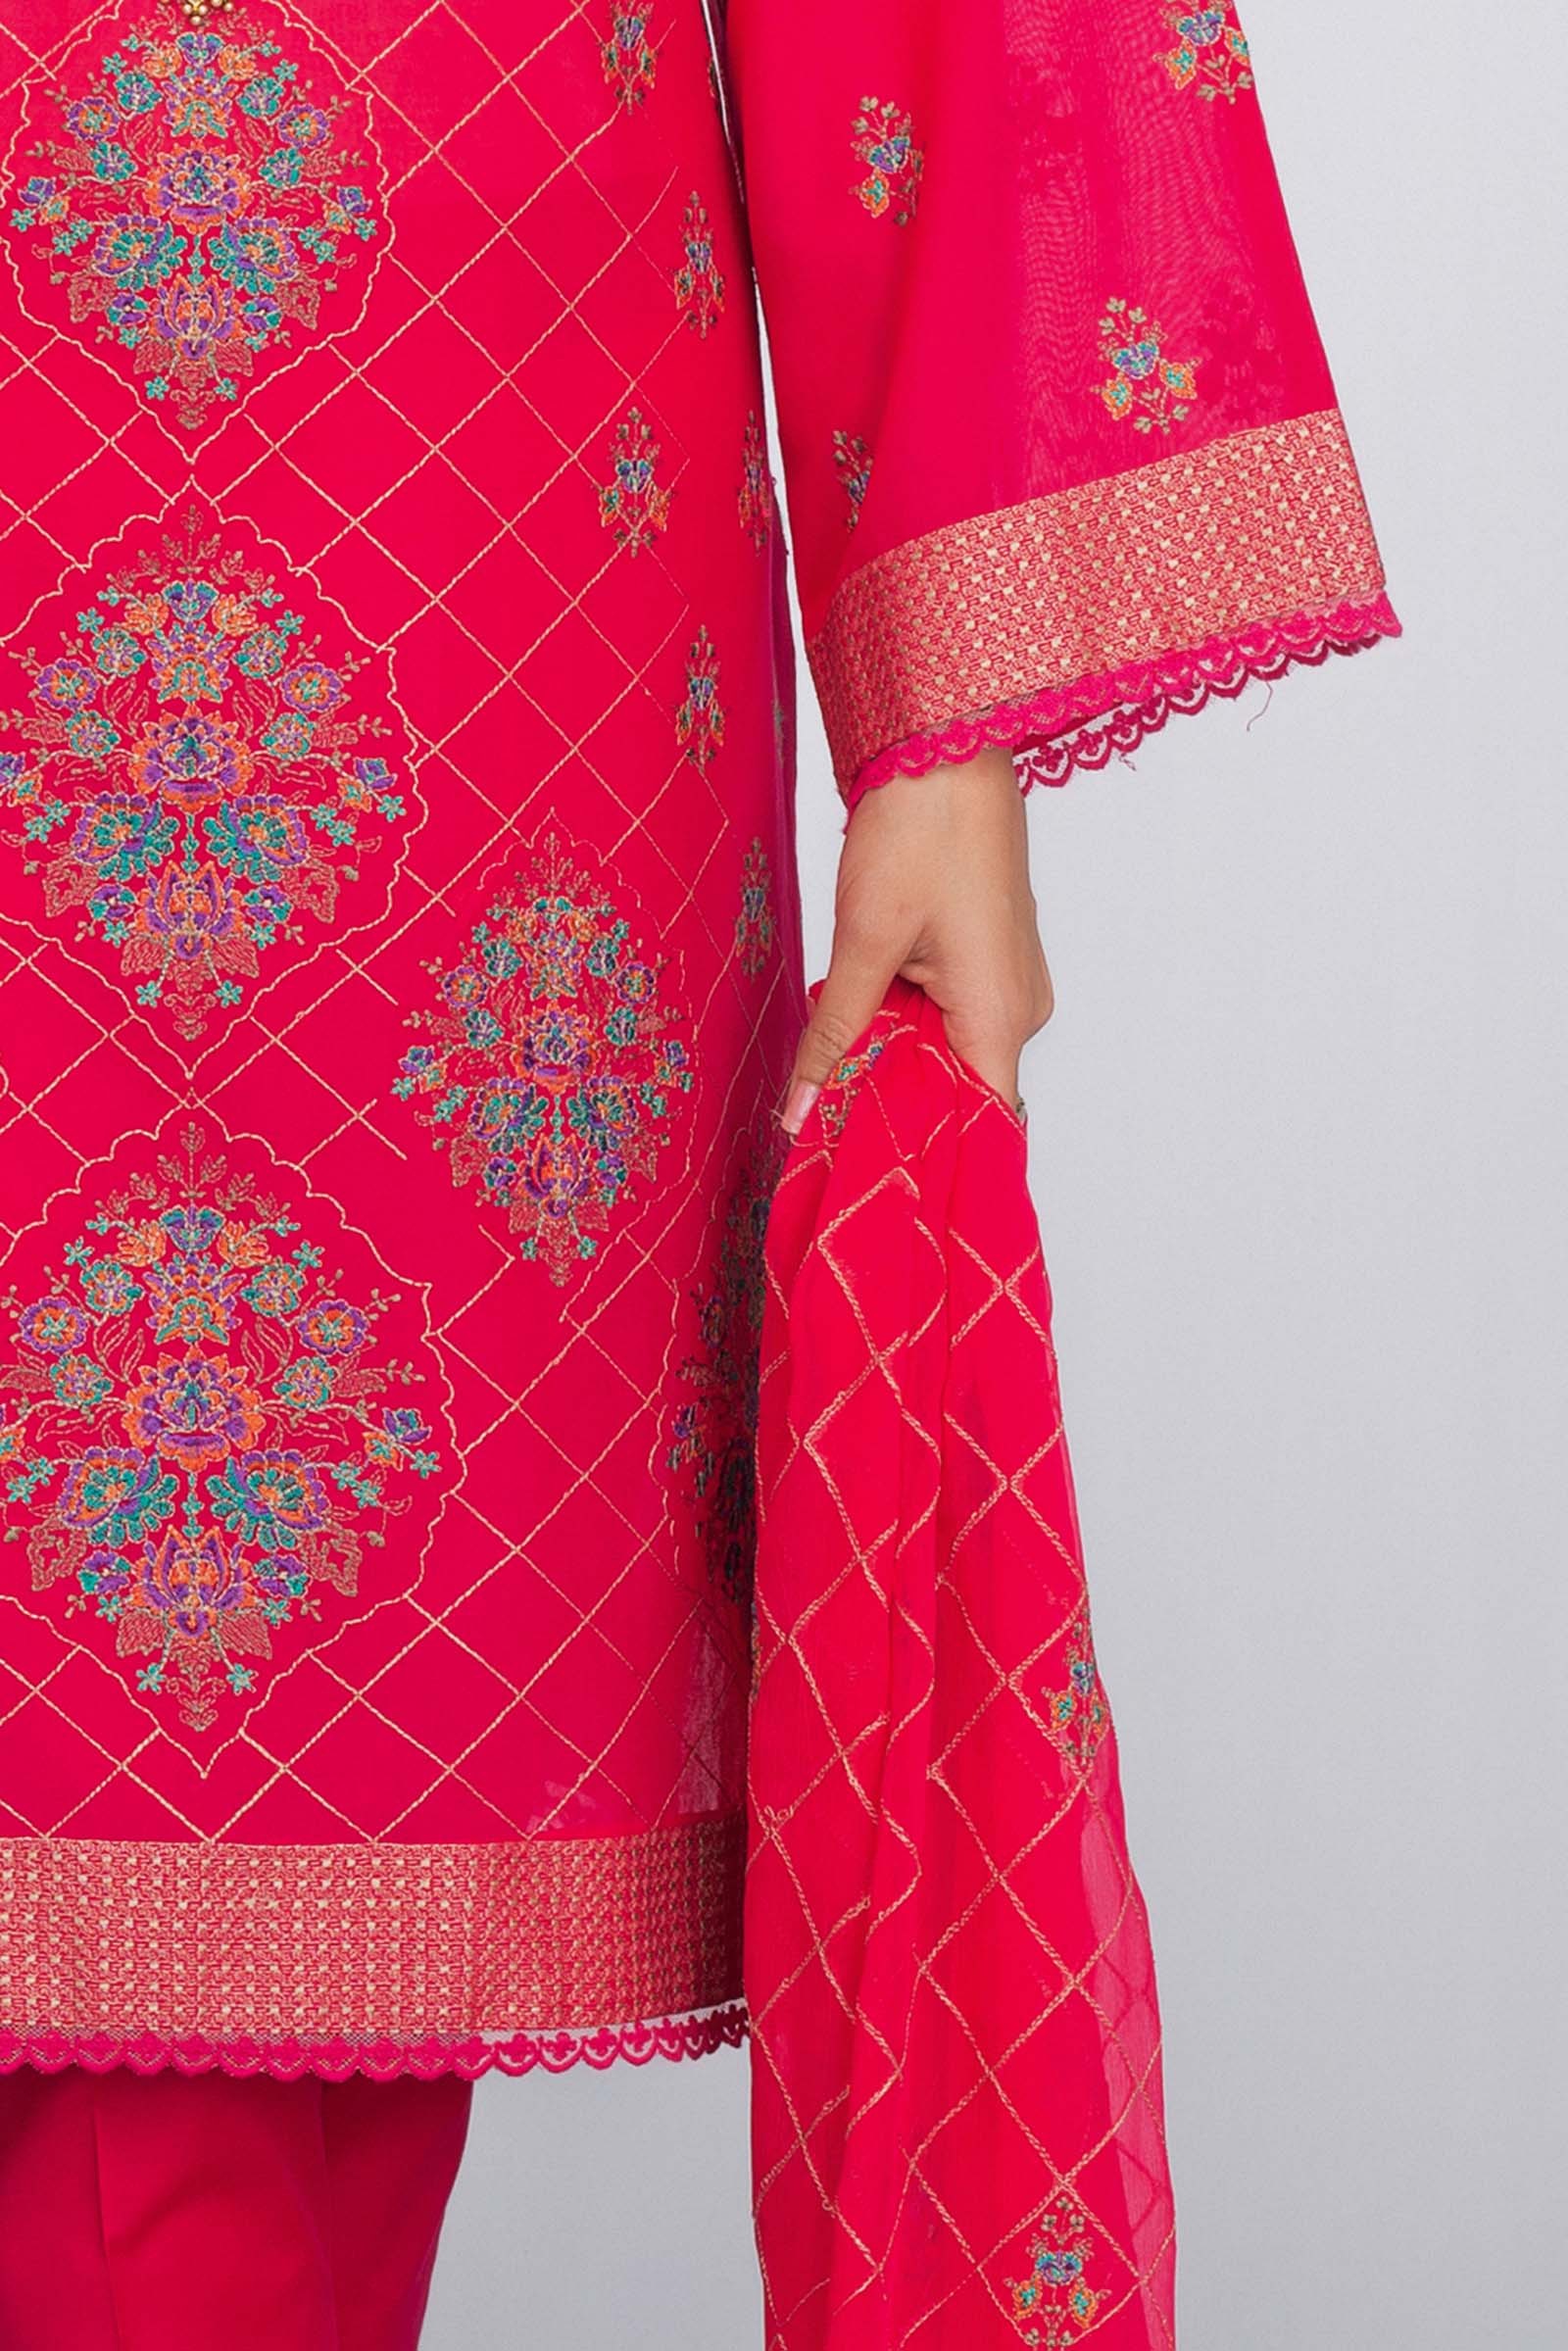 Unstitched Pakistani Dress by Bareeze Lawn Collection 2018